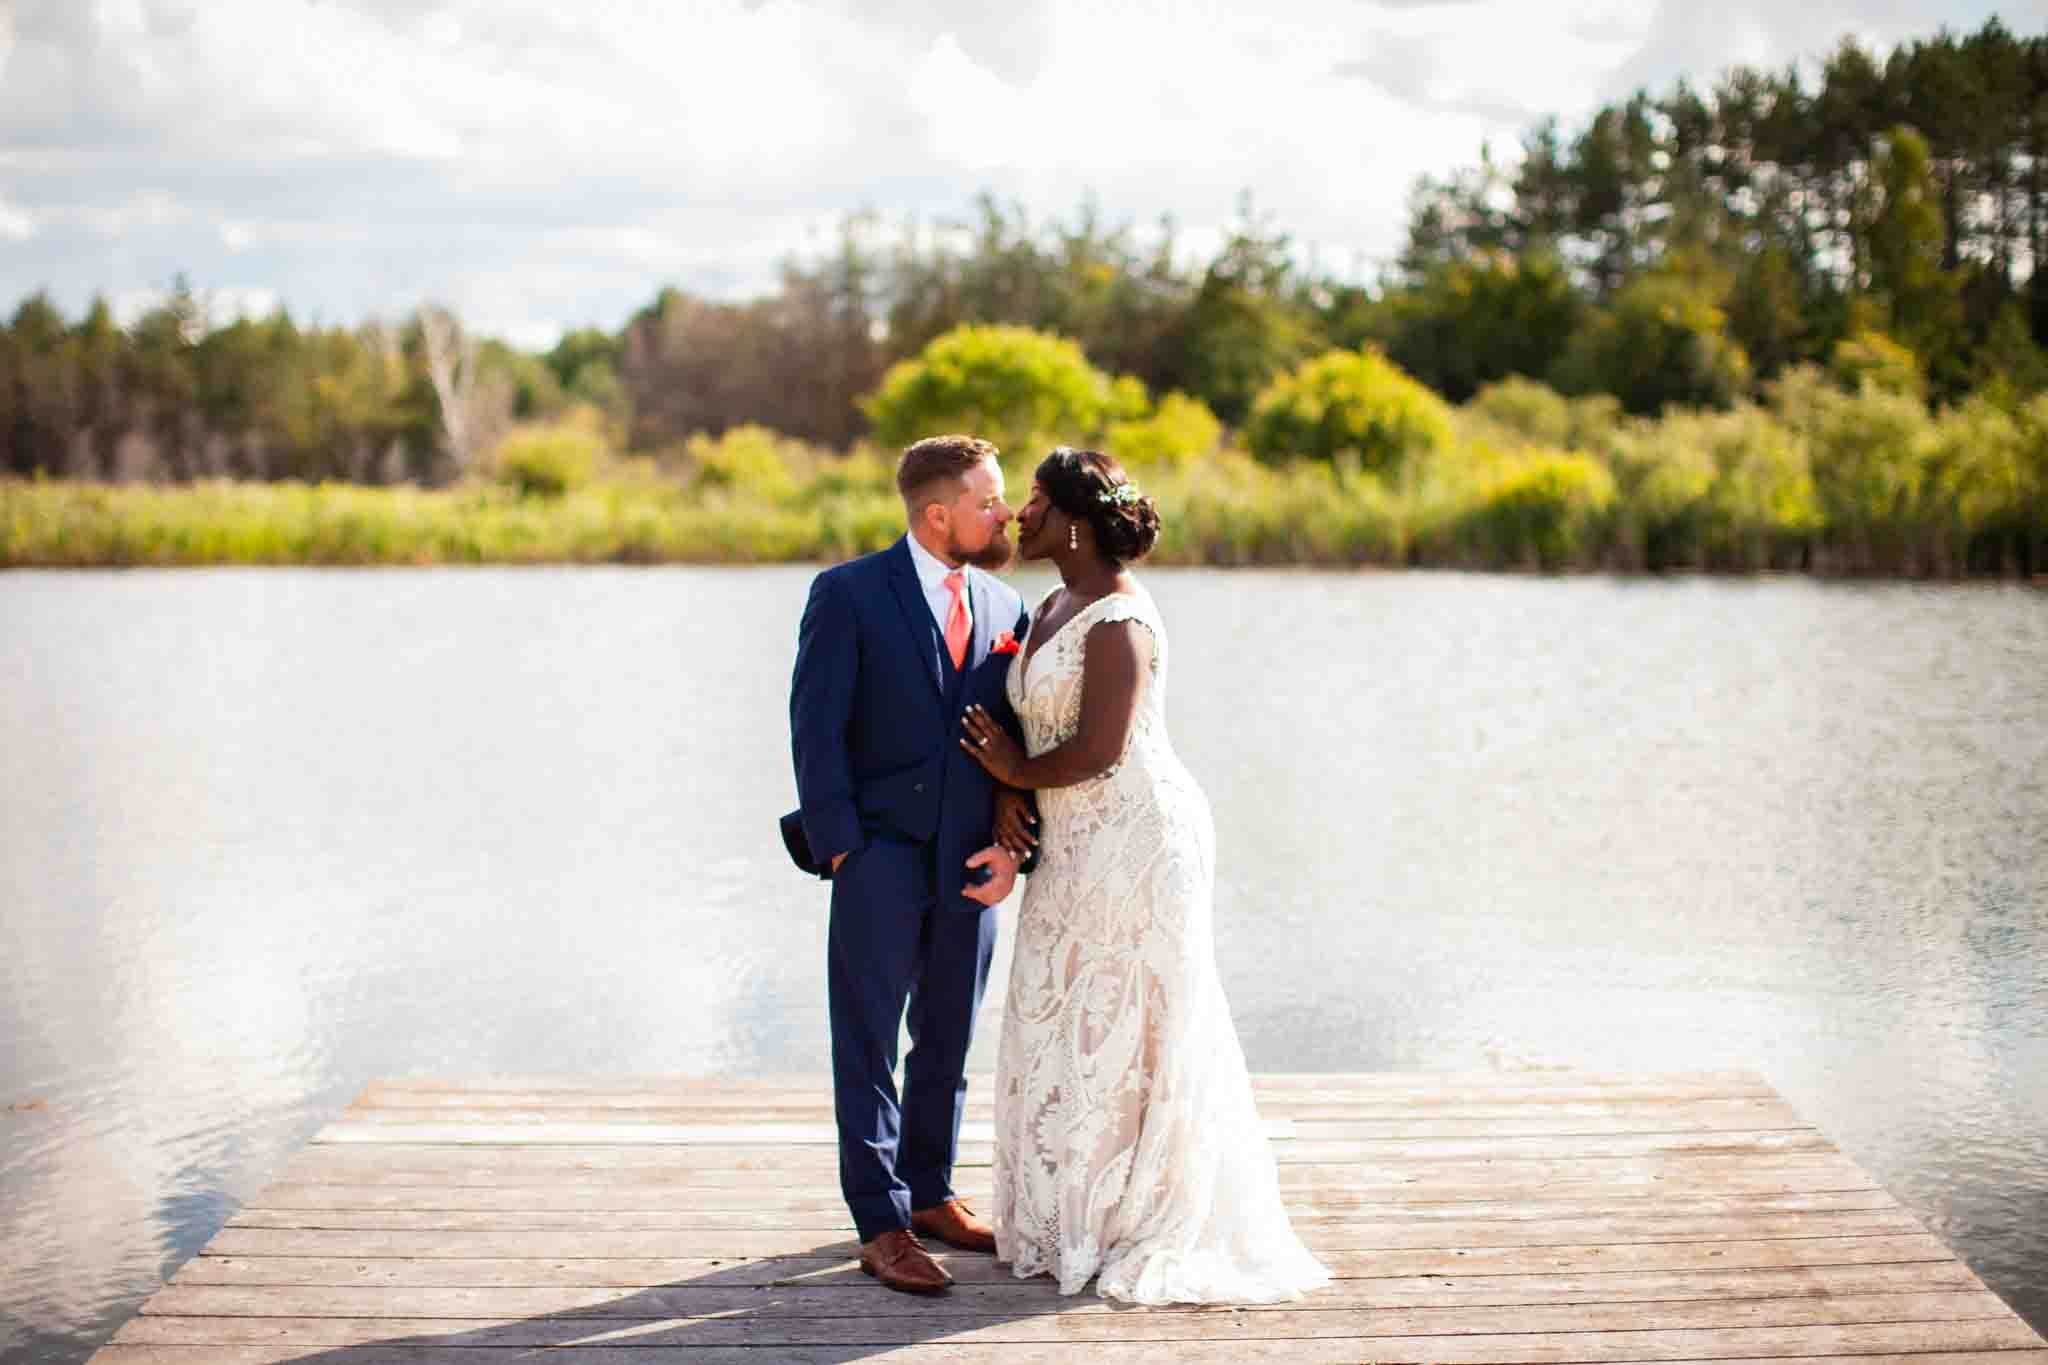 Toronto Ontario Based Wedding Photographer-3.jpg